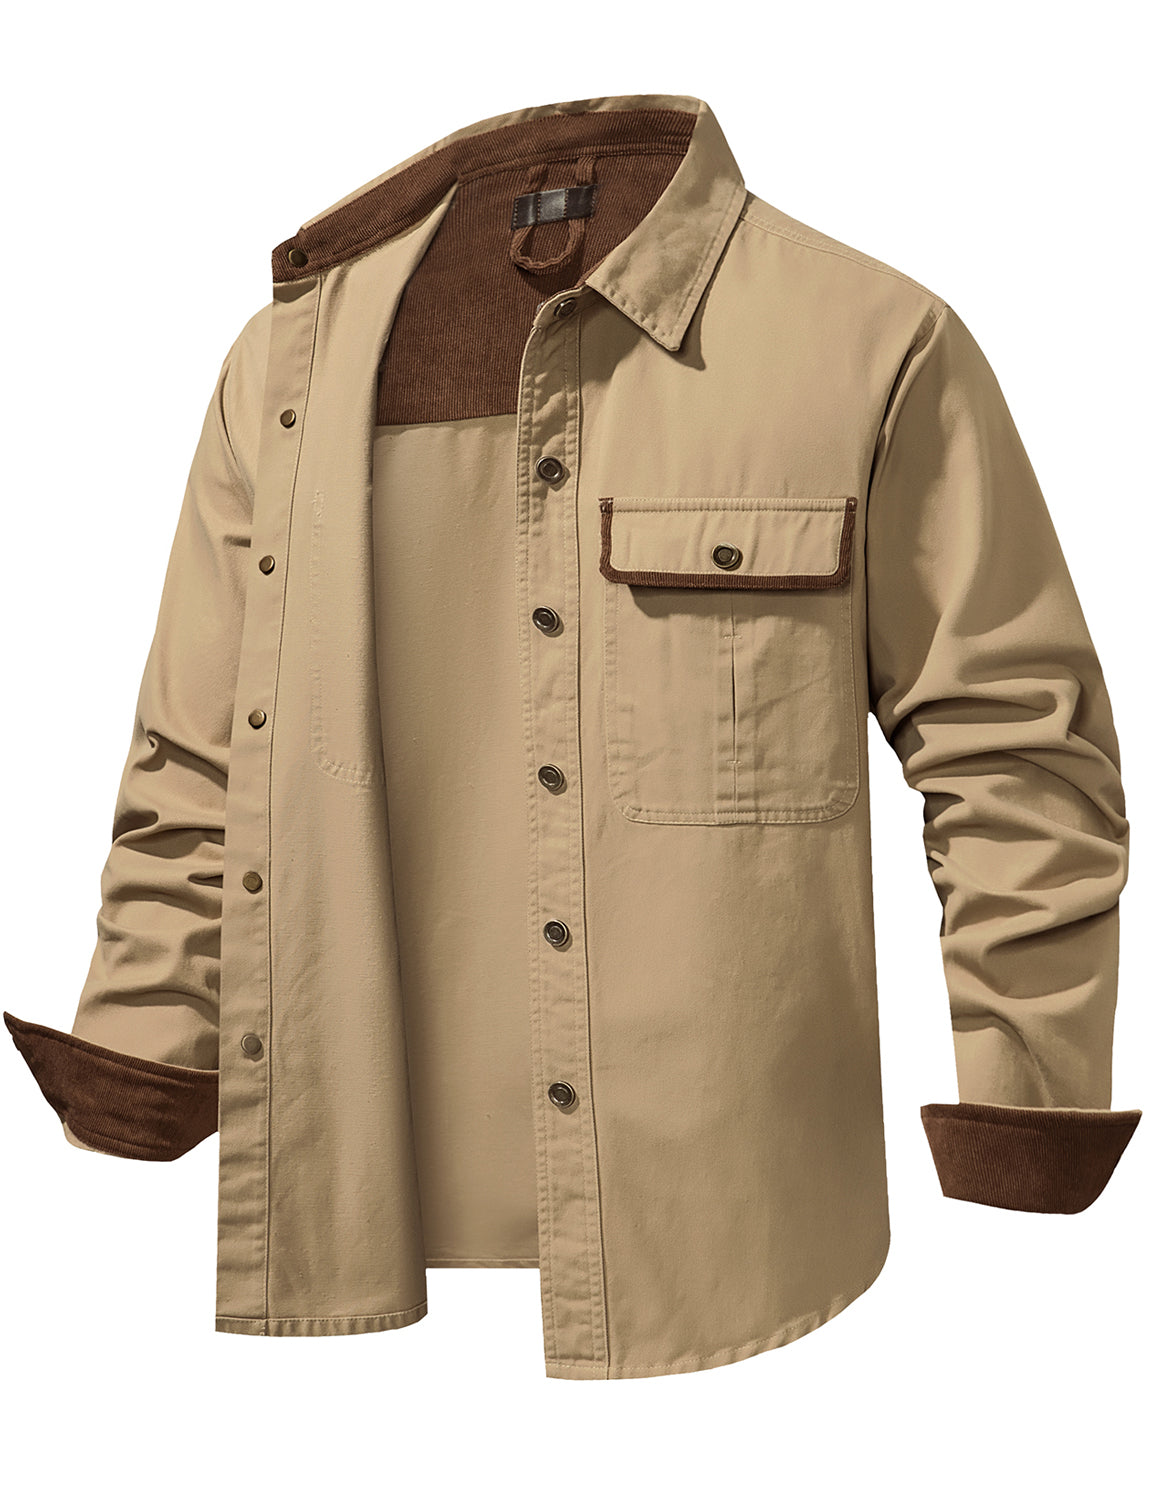 Men's Casual Cotton Pocket Button Up Fall Outdoor Hiking Long Sleeve Shirt